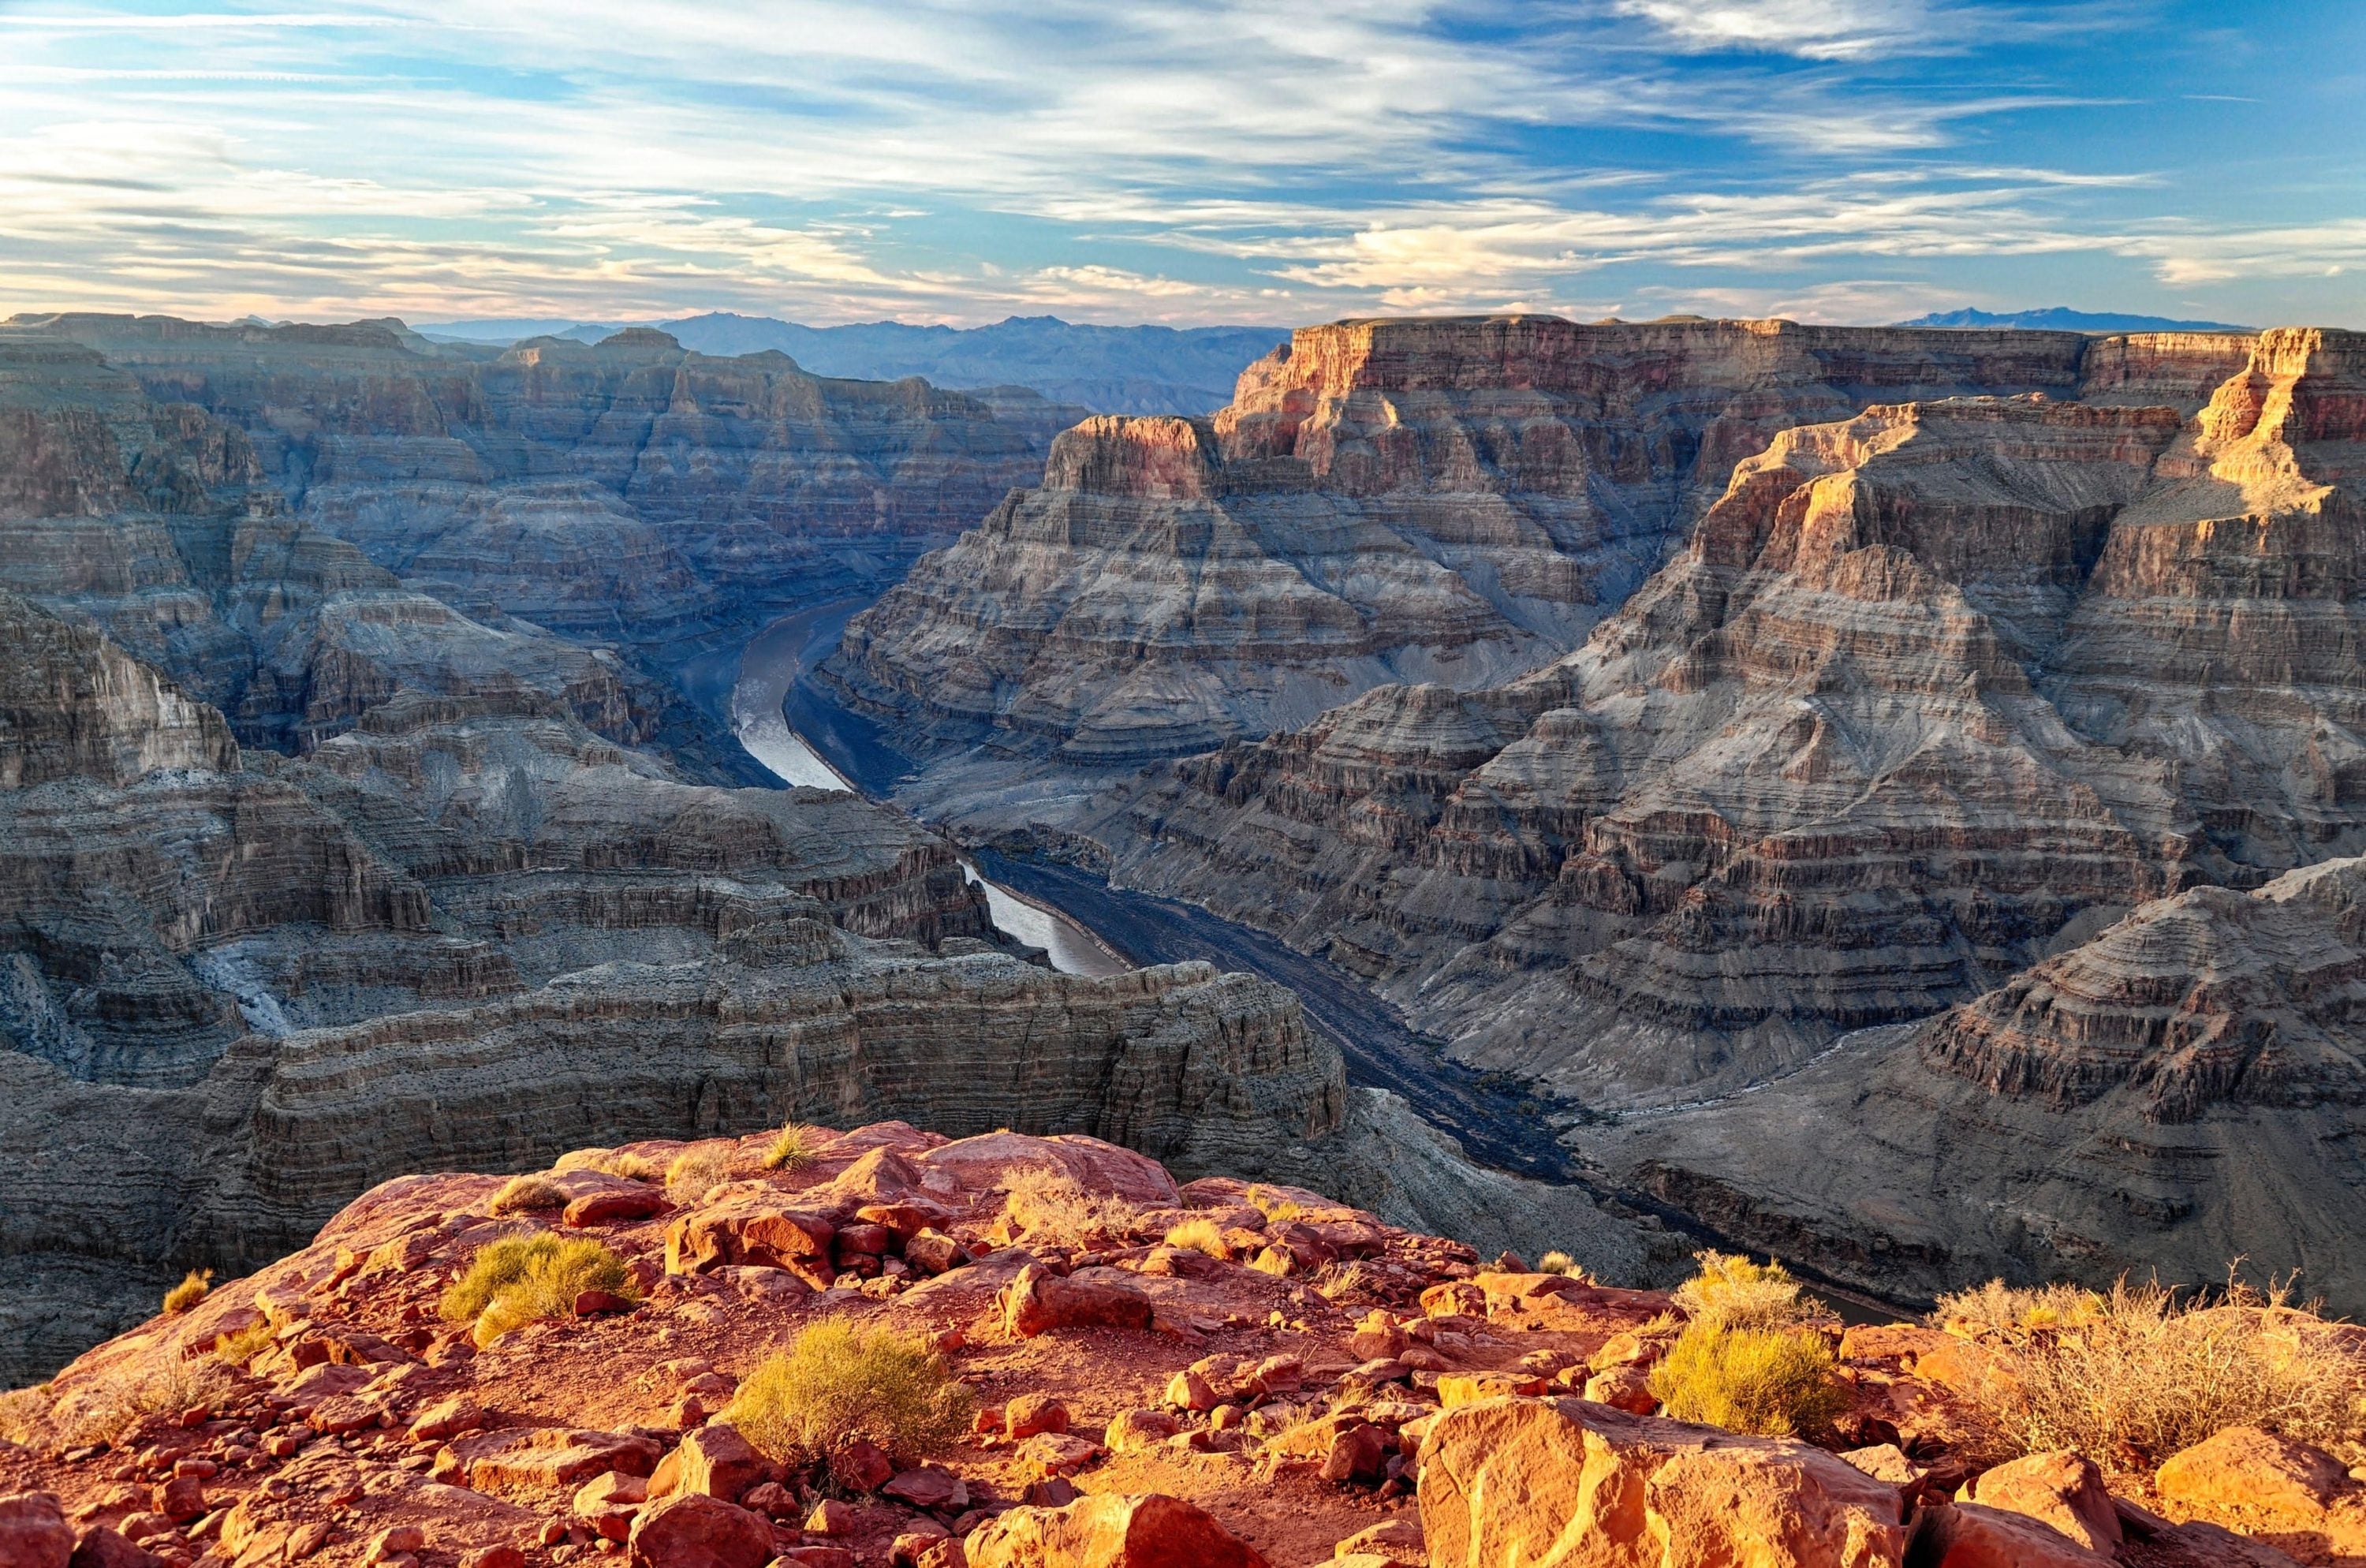 Grand Canyon and river views